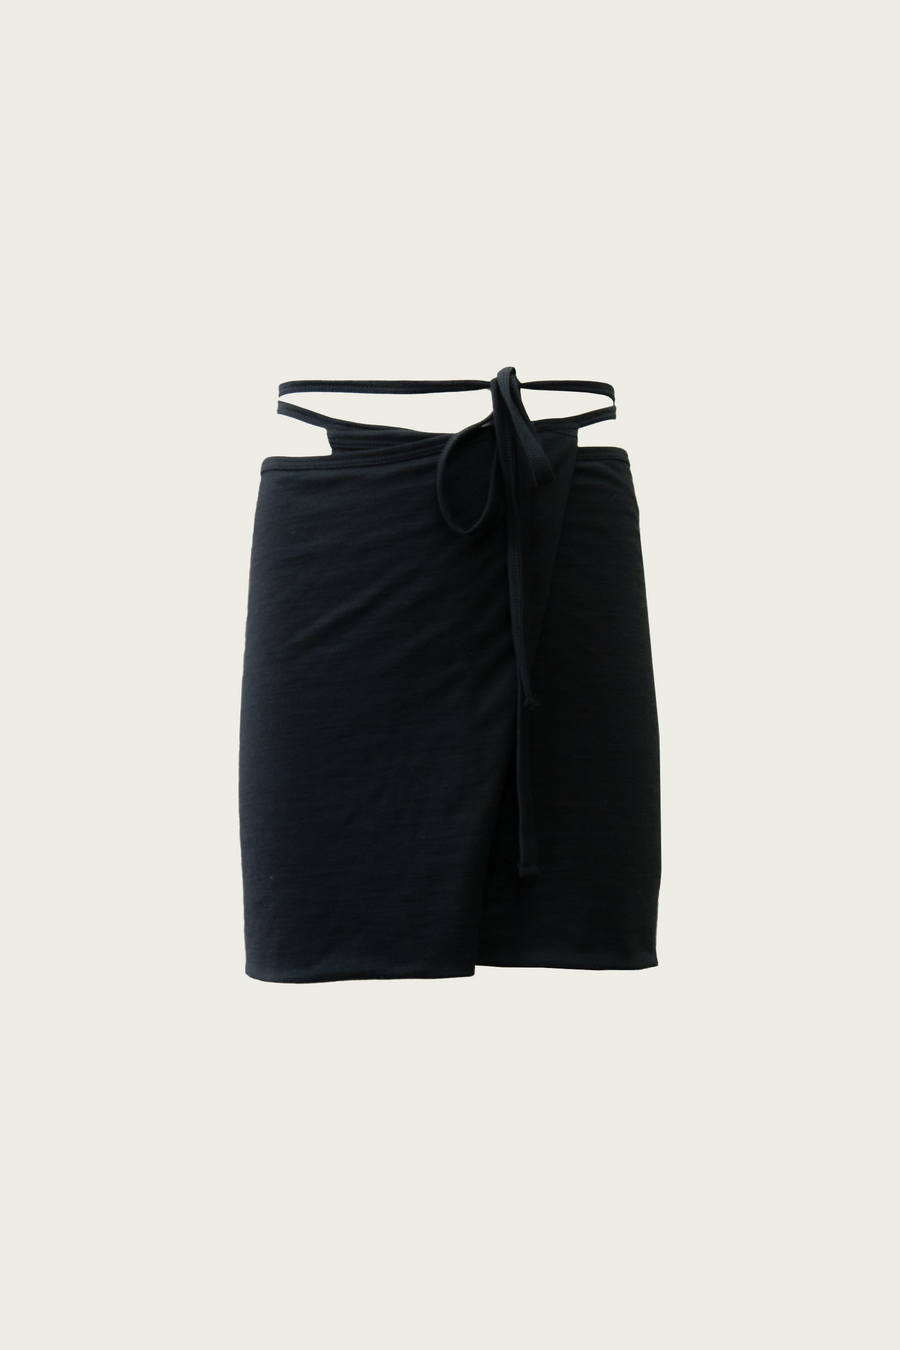 Fold Mini - Black Merino (PO)